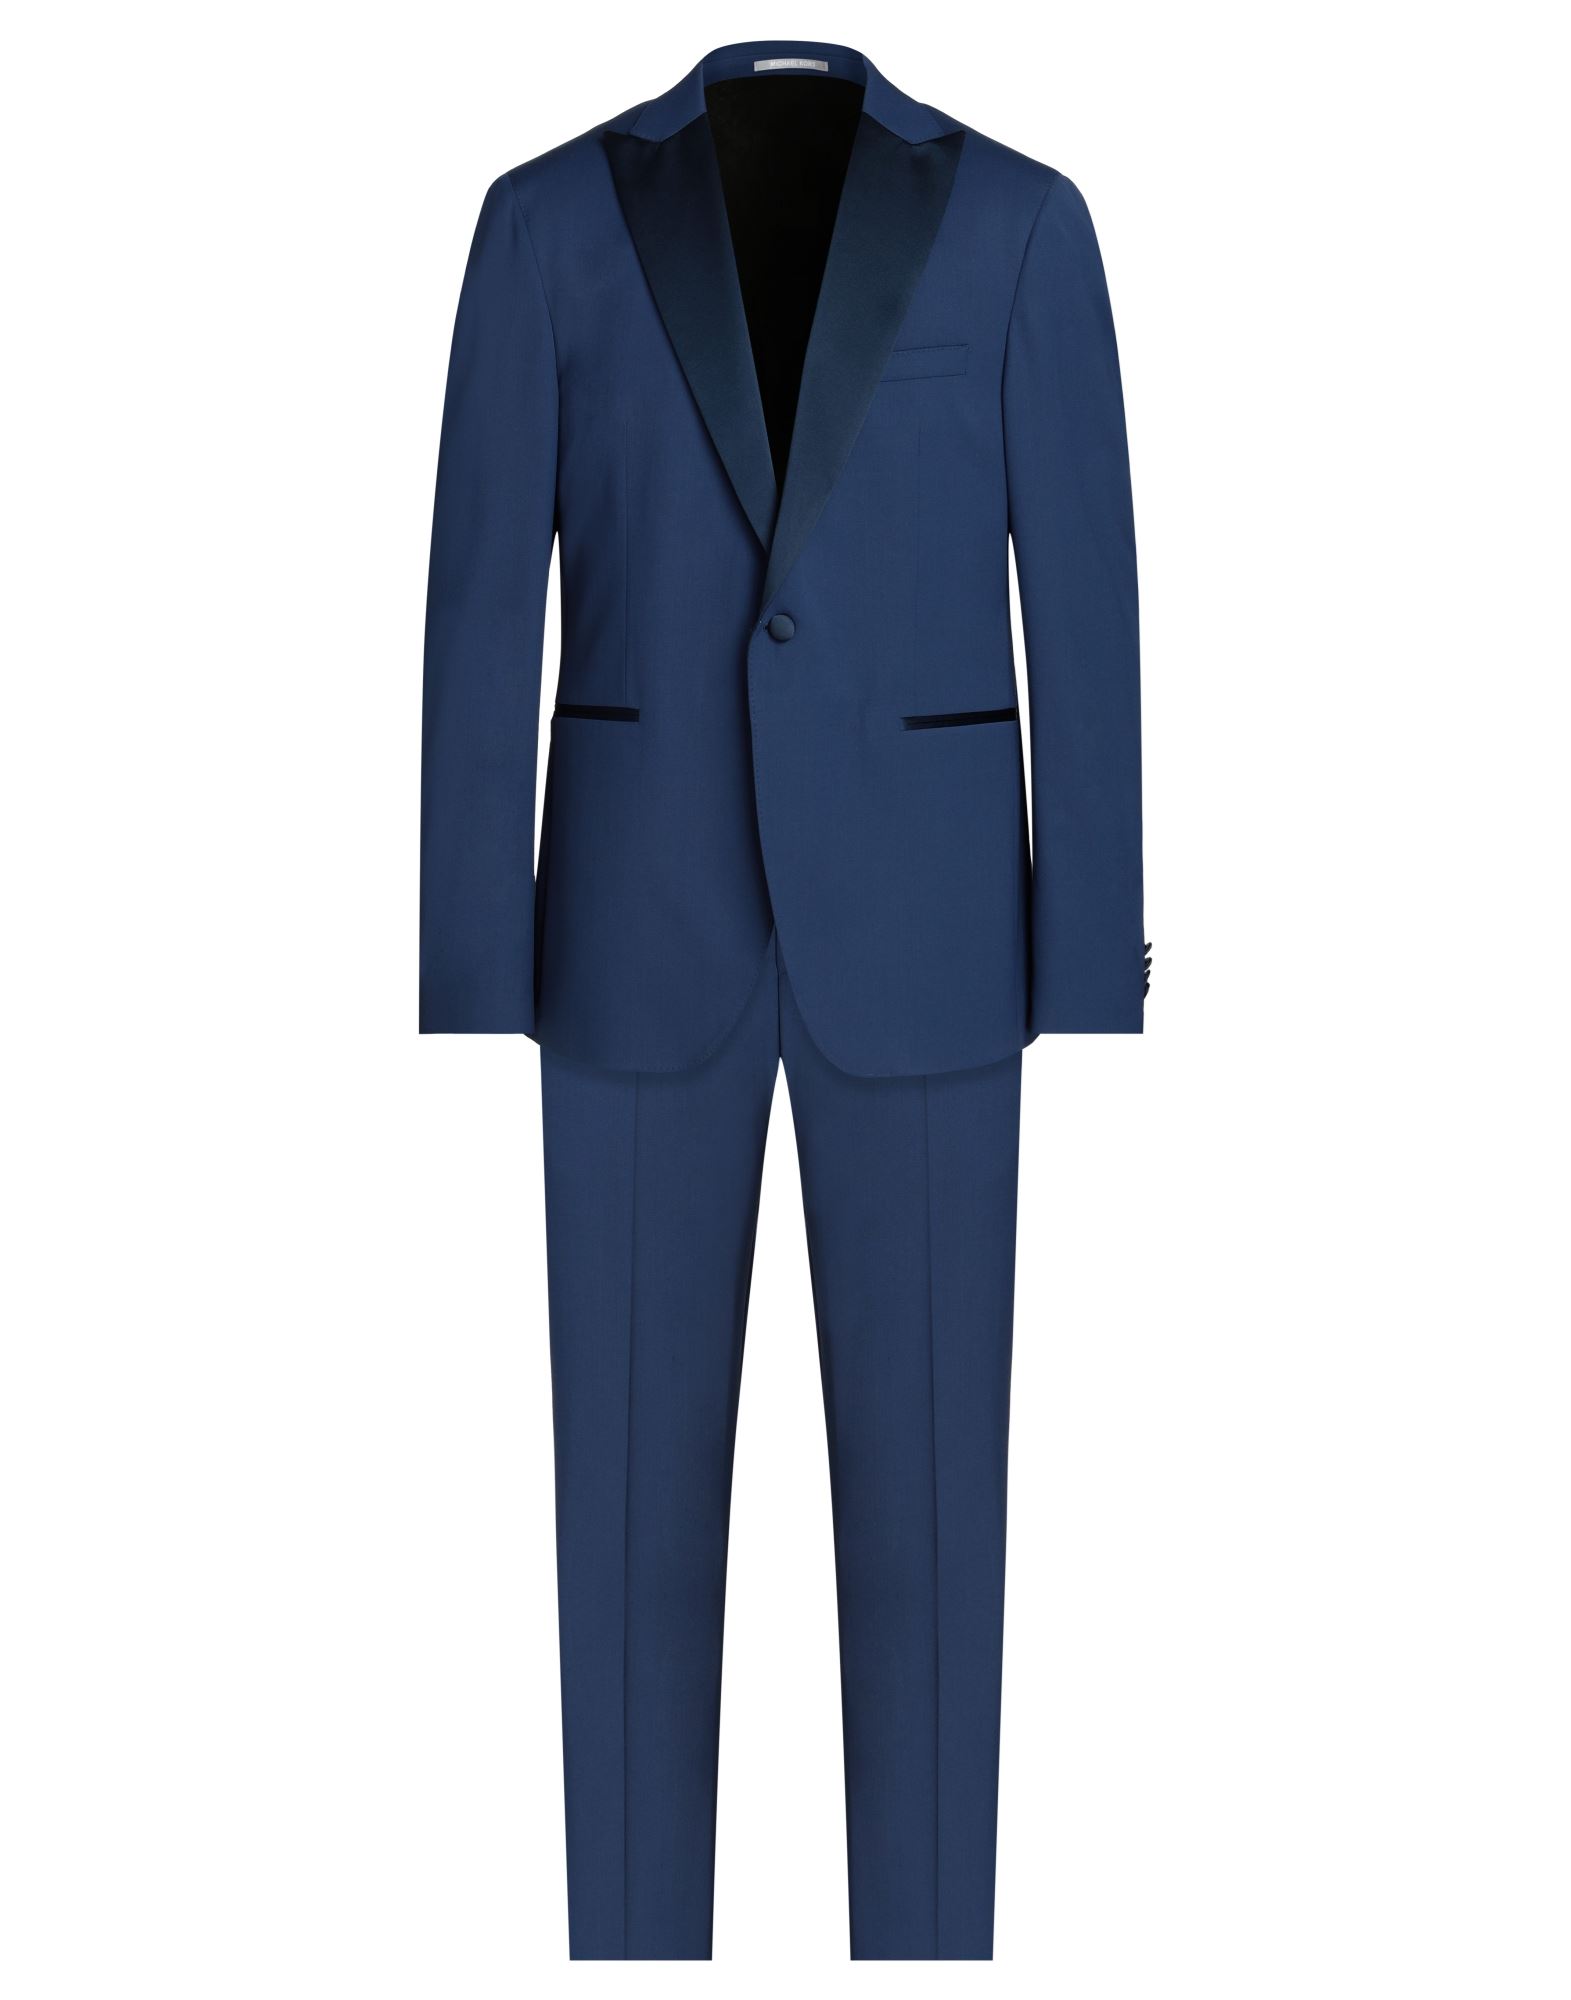 Michael Kors Mens Suits In Blue